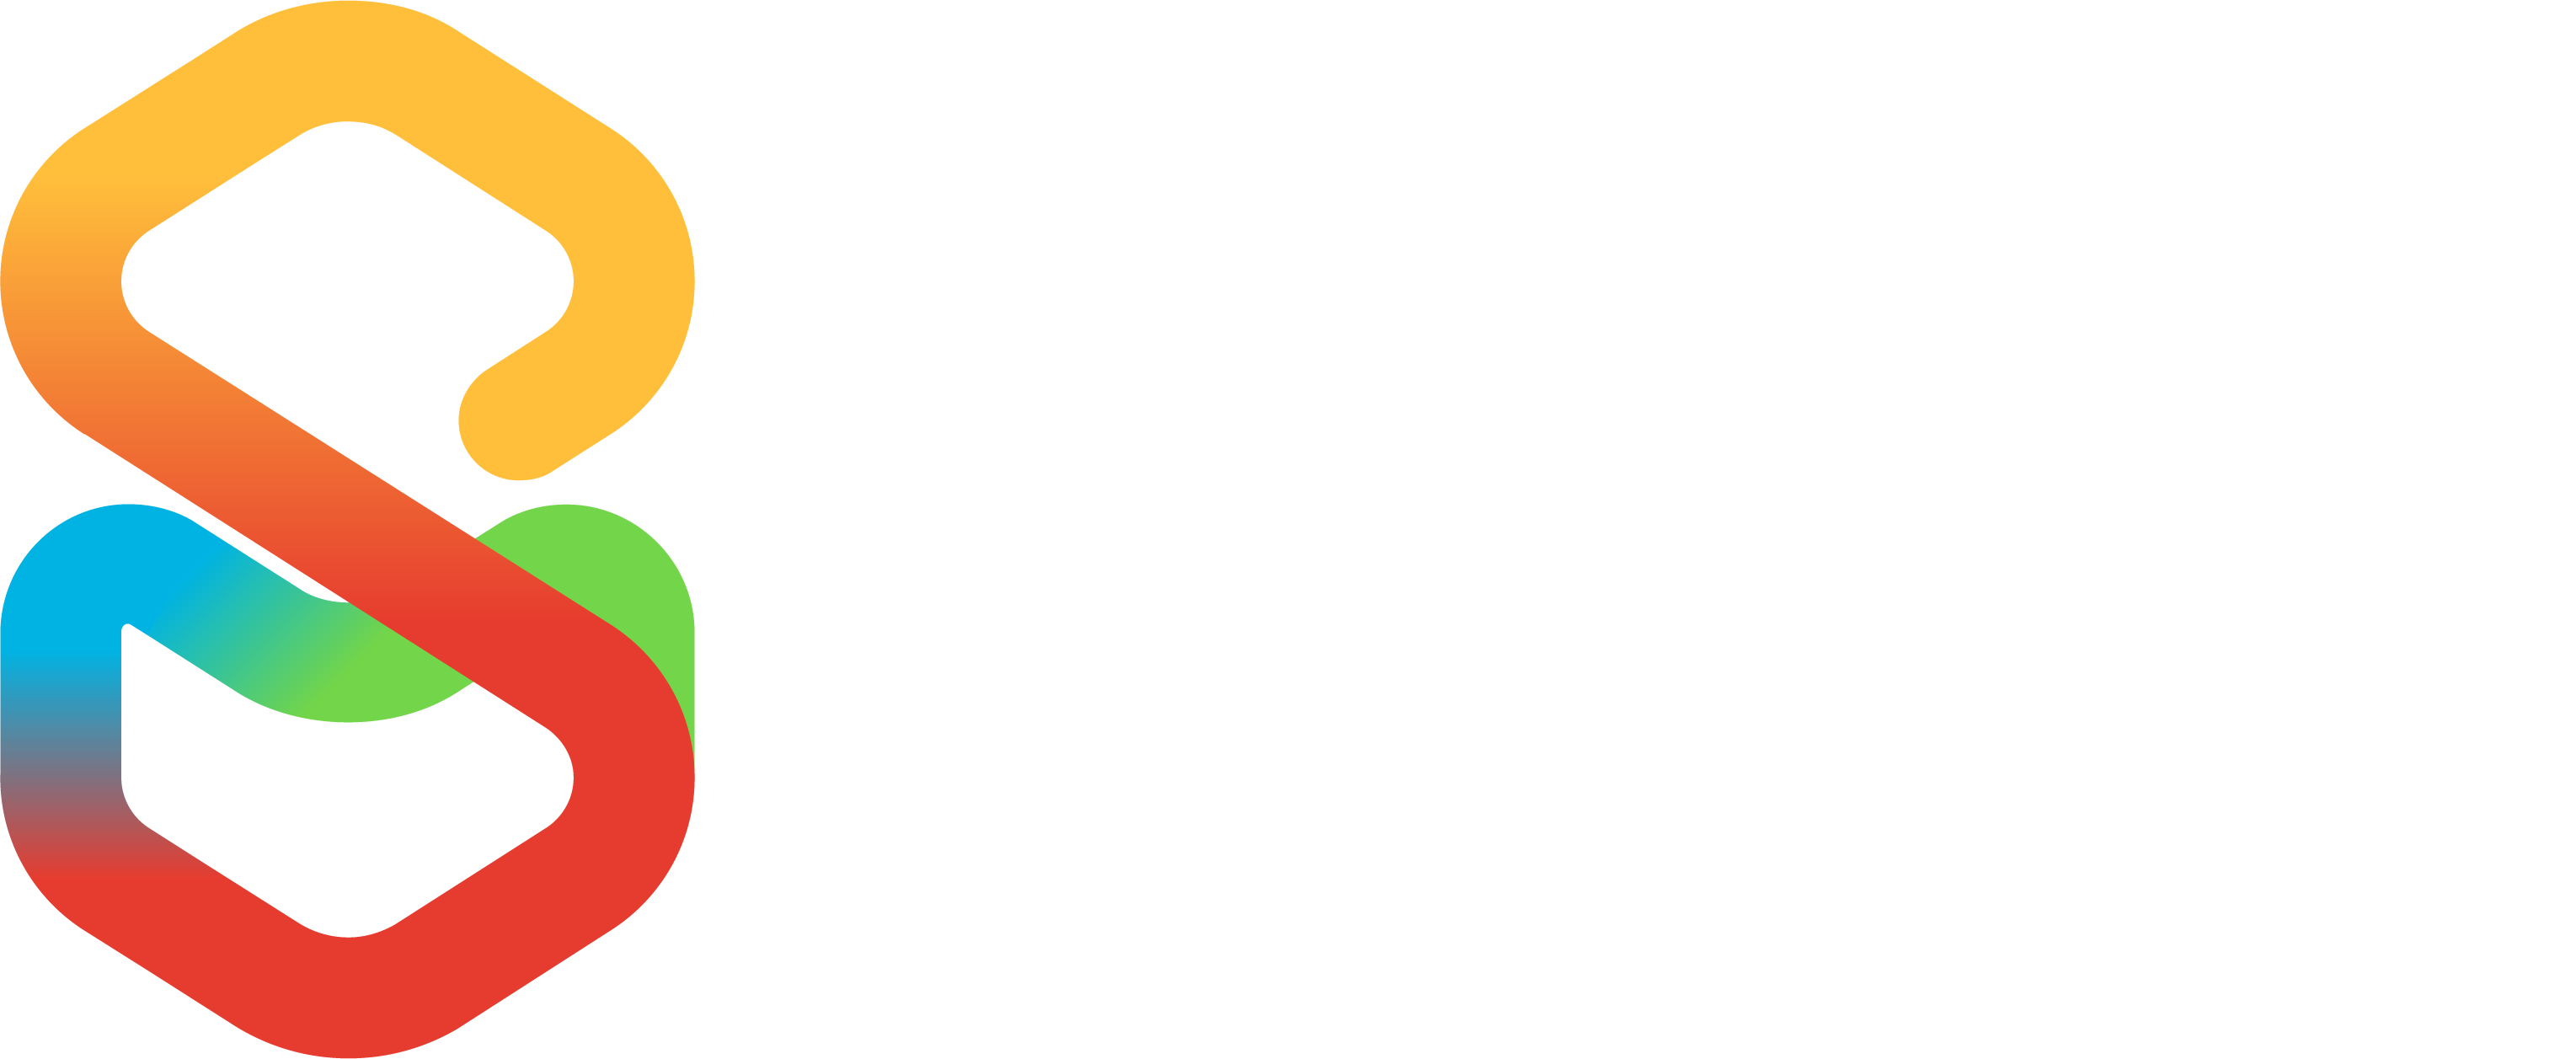 SMC Global Power logo